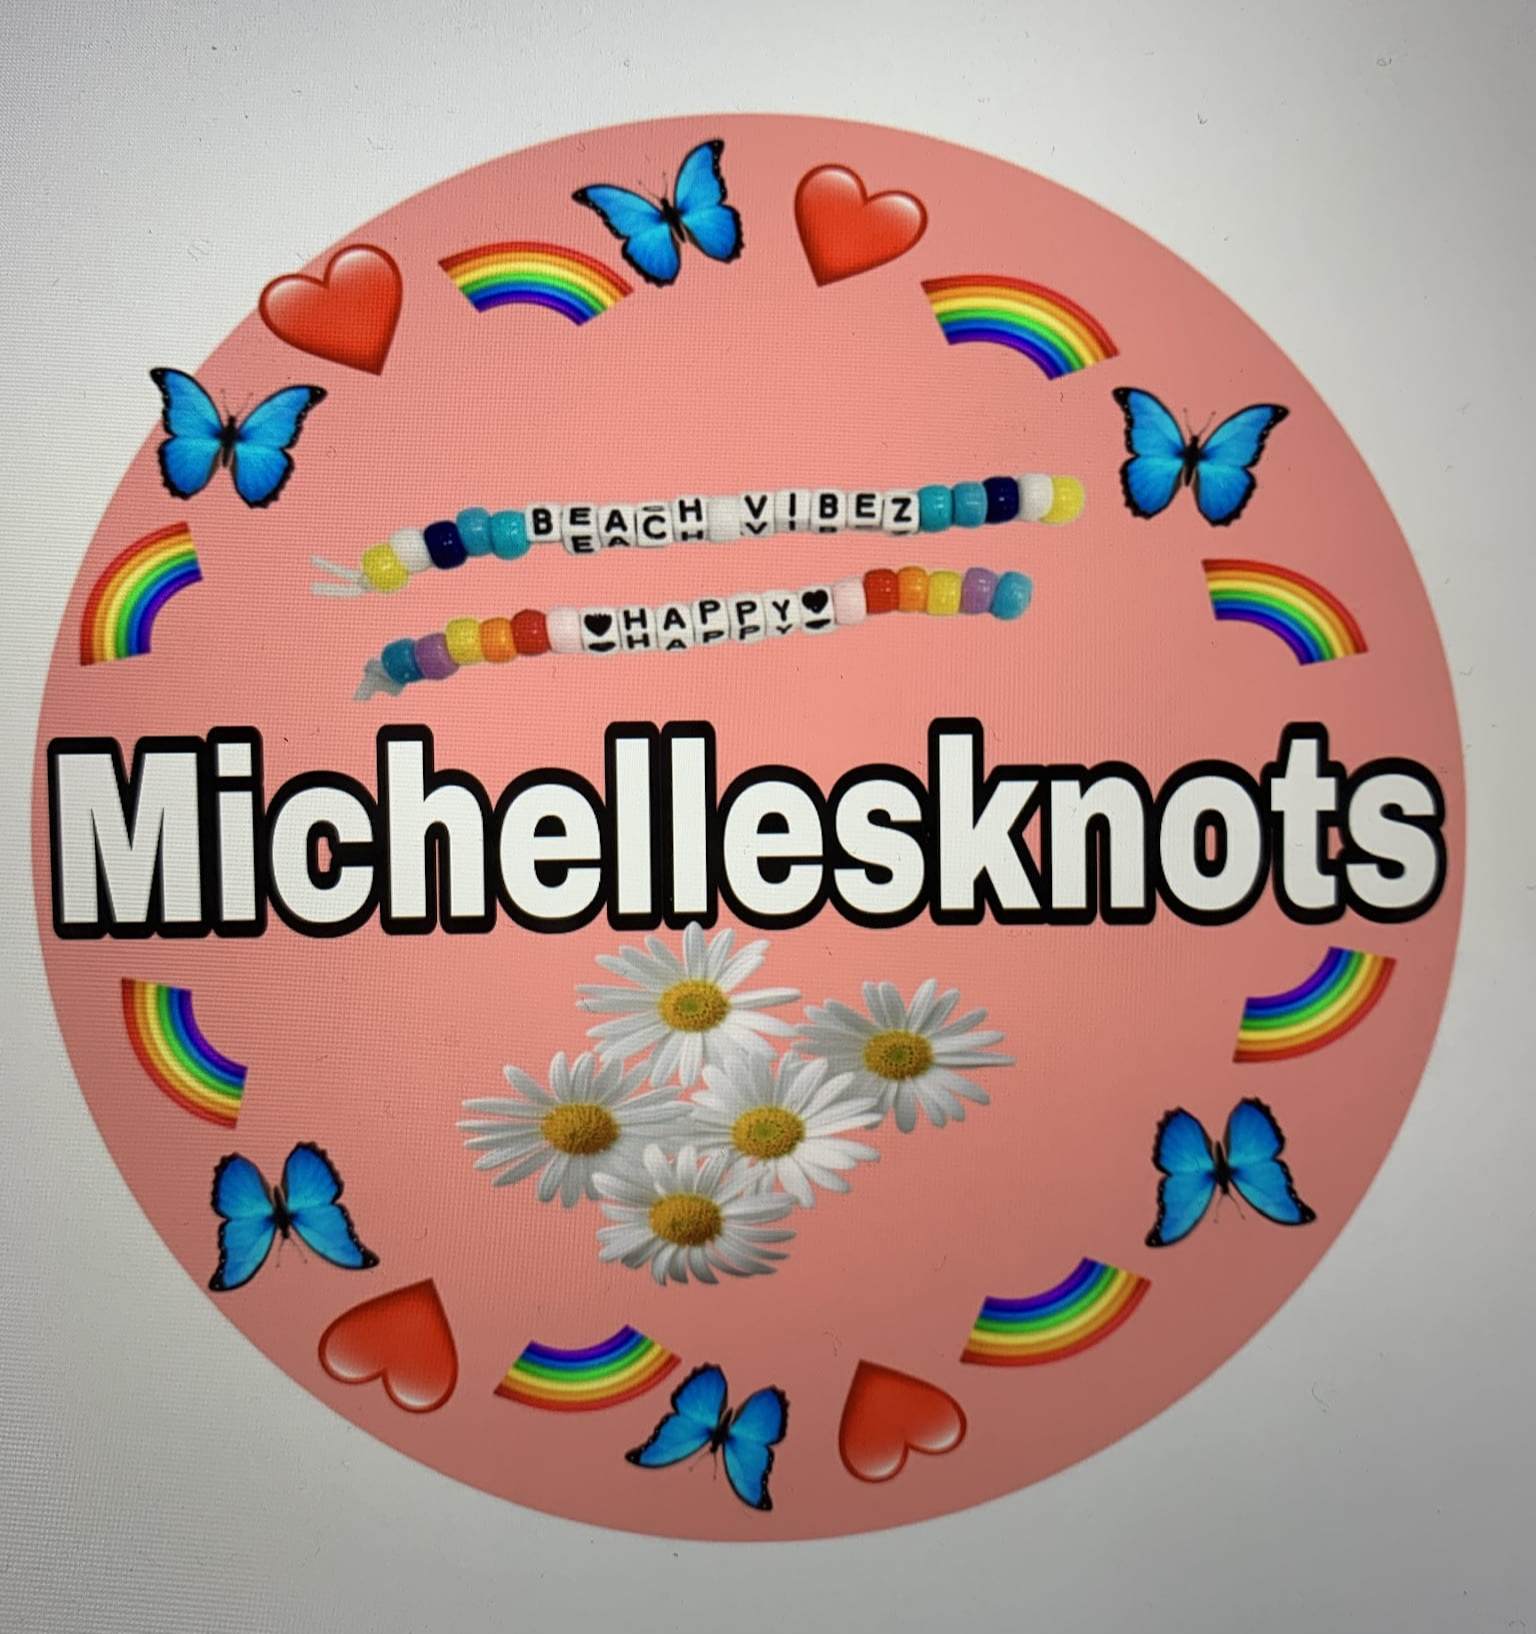 Michellesknots